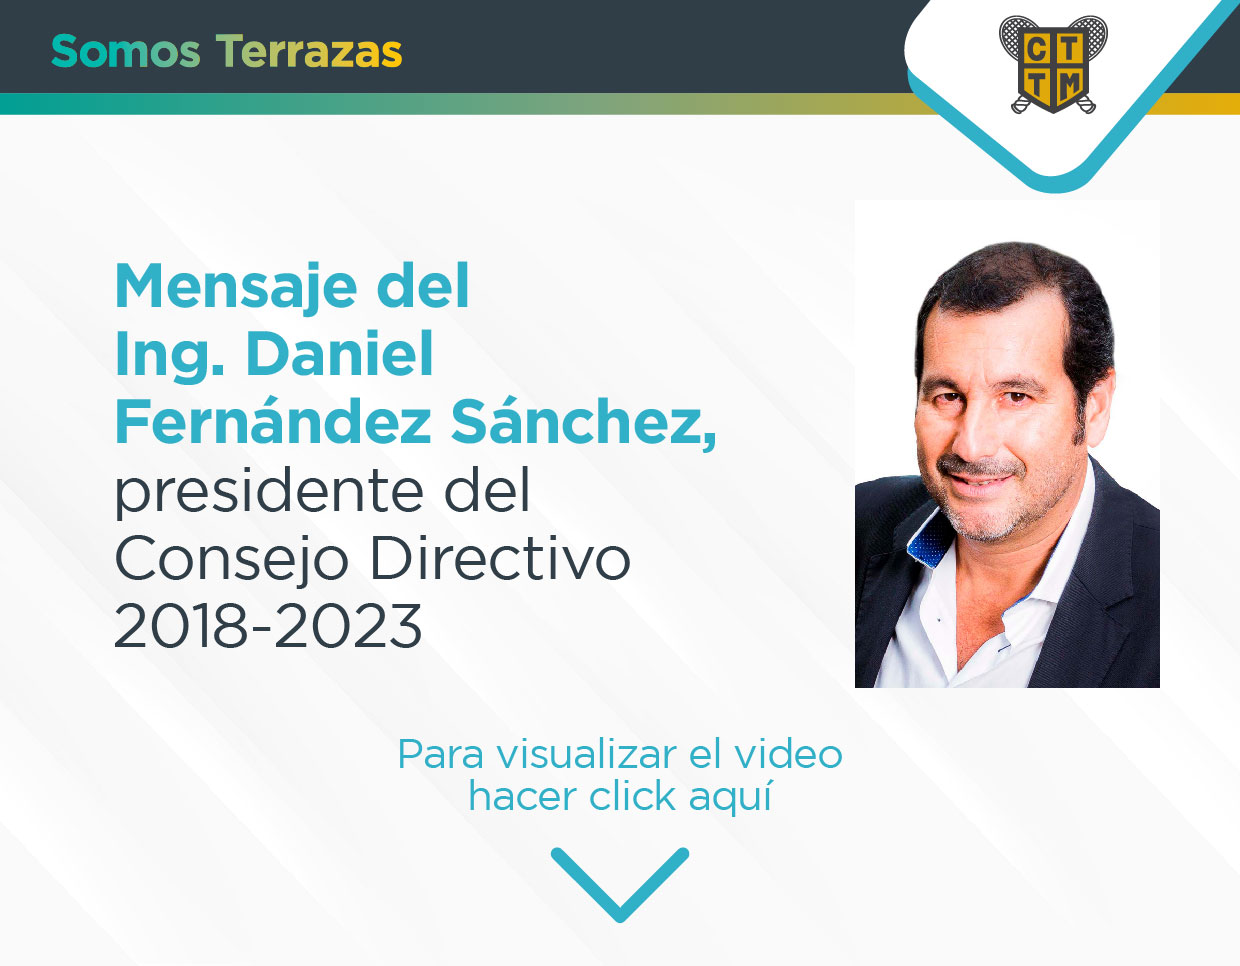 MENSAJE DEL ING. DANIEL FERNÁNDEZ SÁNCHEZ, PRESIDENTE DEL CONSEJO DIRECTIVO 2018-2023